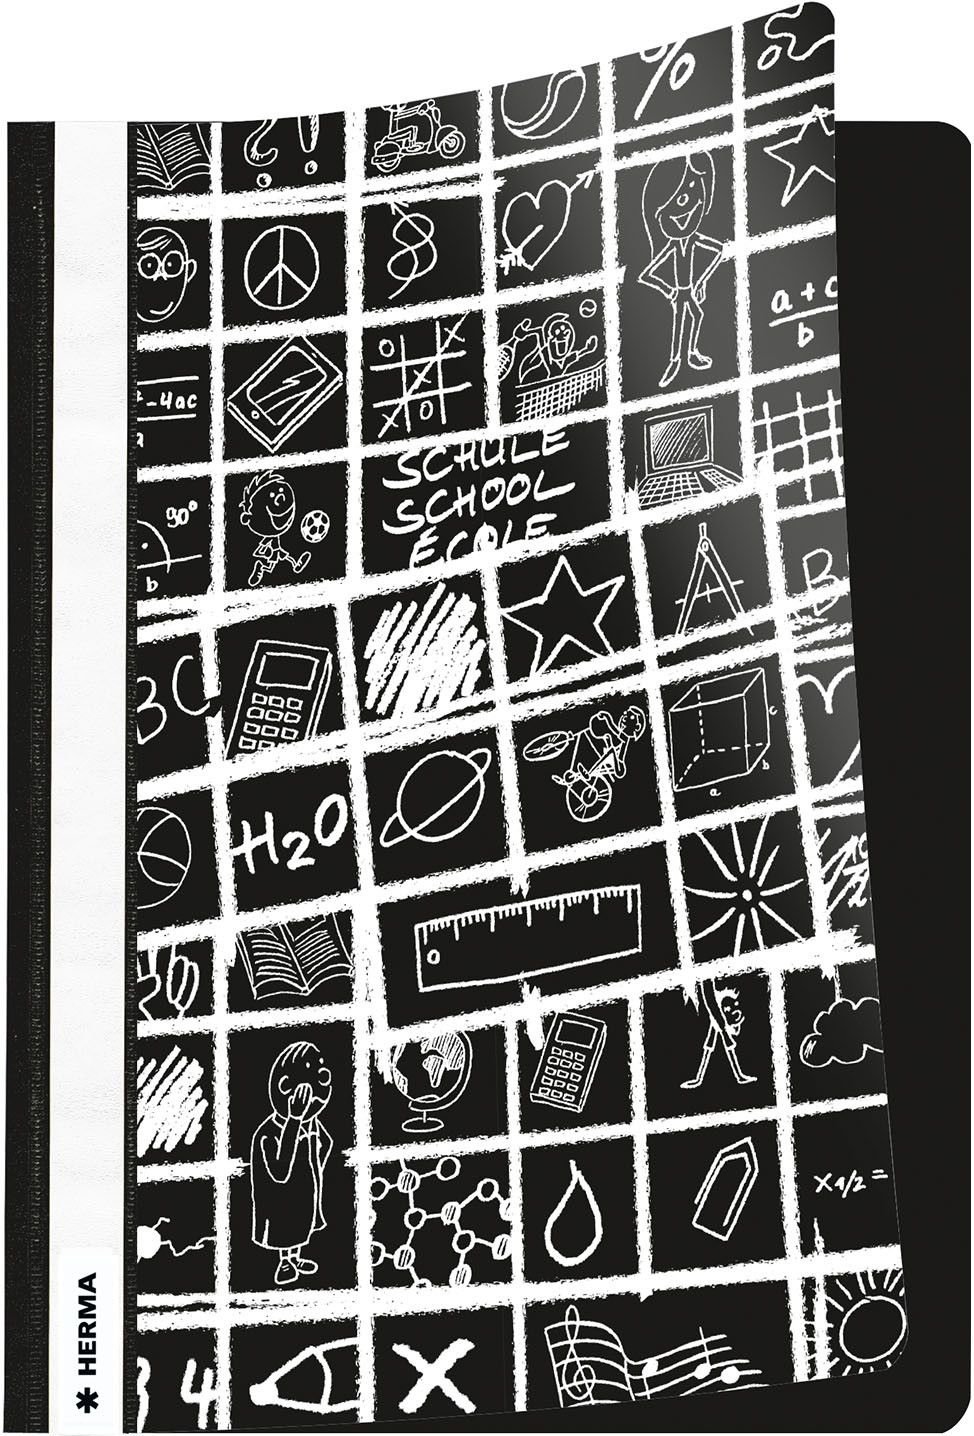 Dosare - Workbook, negru, A4, 10p. (19369)